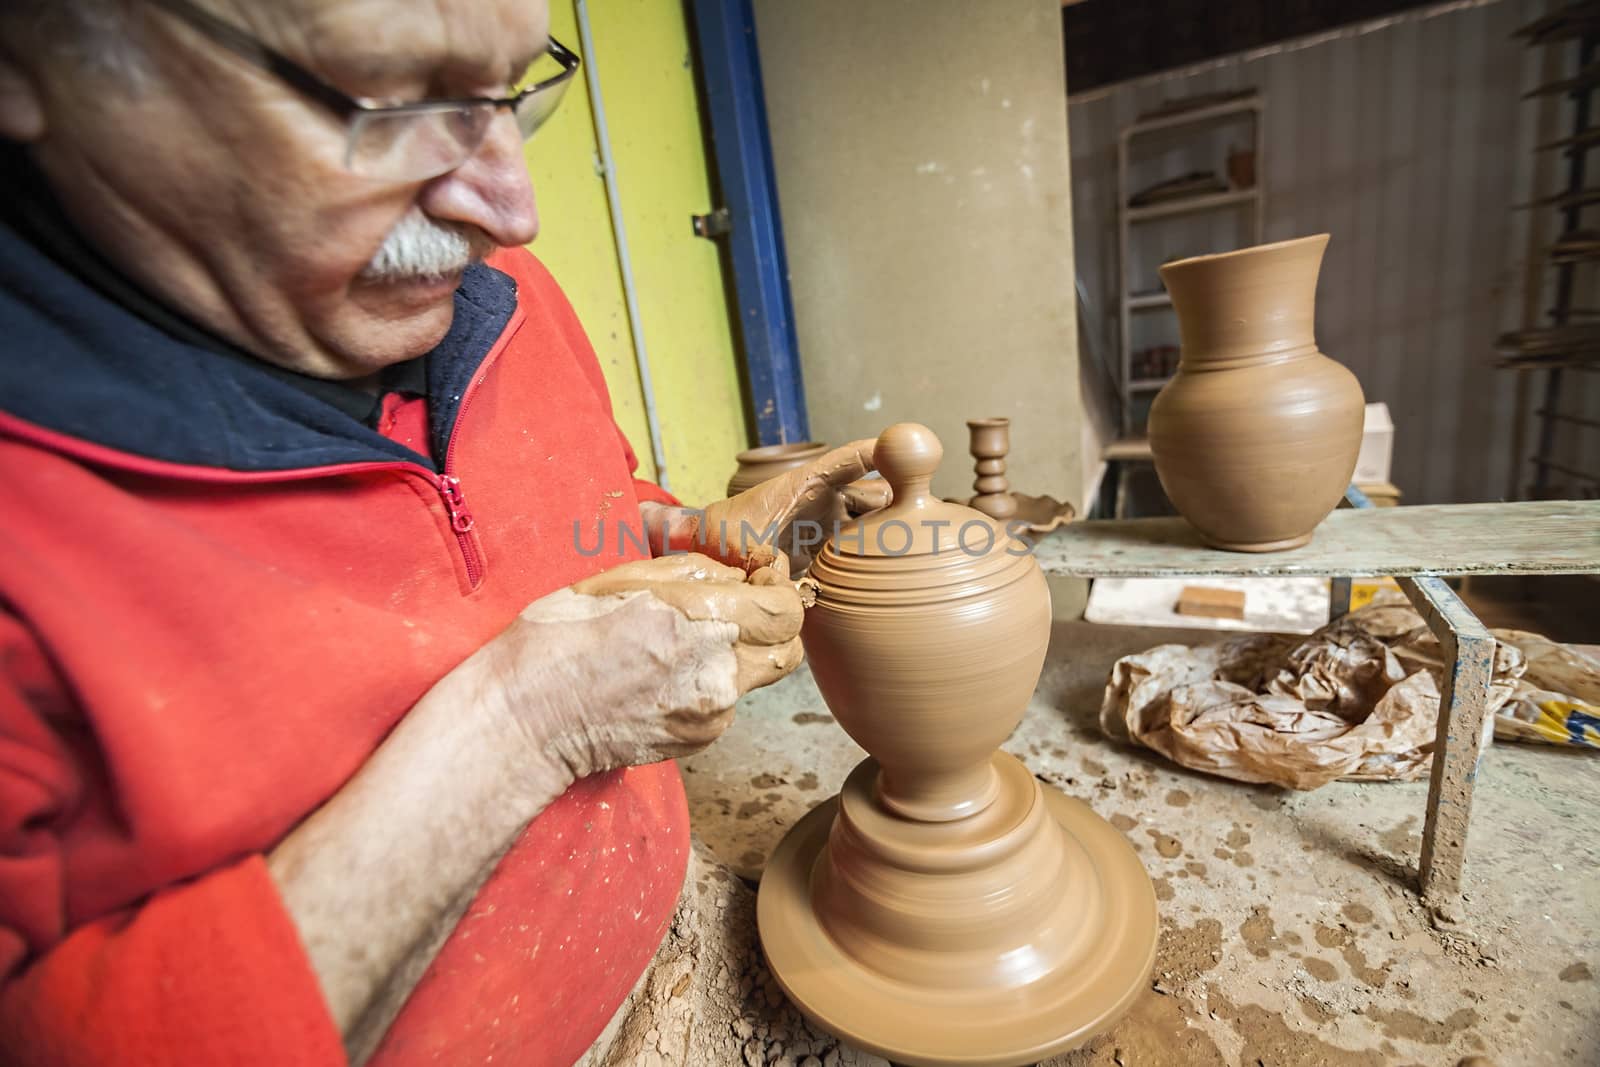 Potter making a jug of mud by digicomphoto